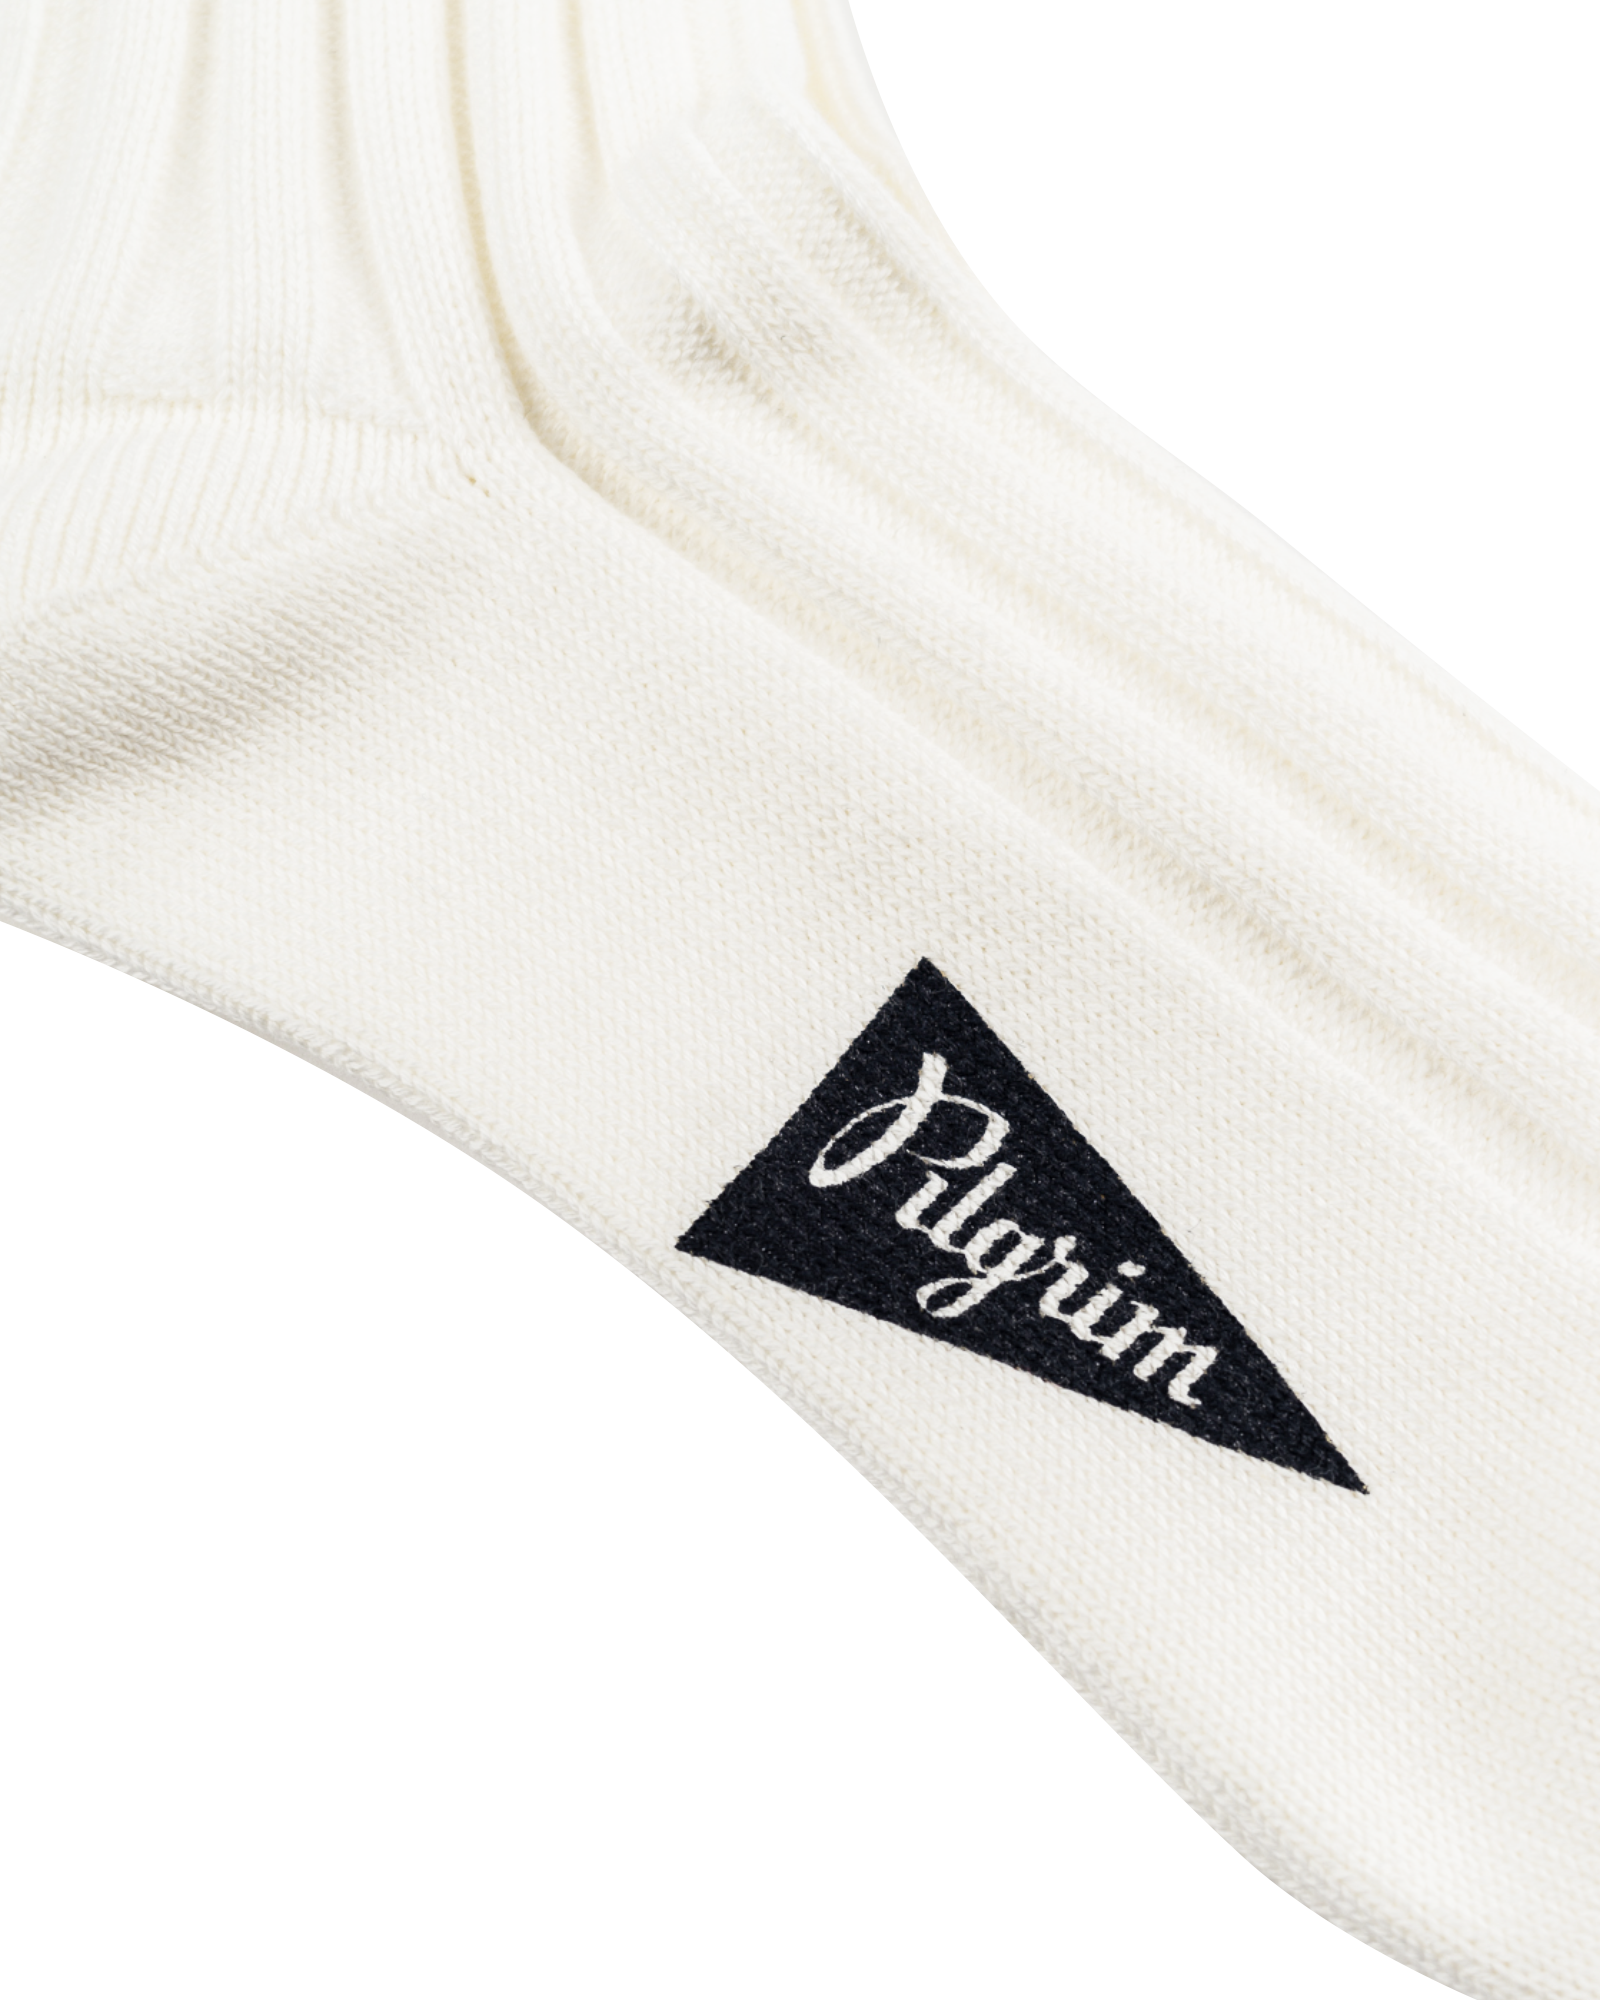 Pilgrim Surf + Supply - Accessory - Pennant - Crew Socks - White